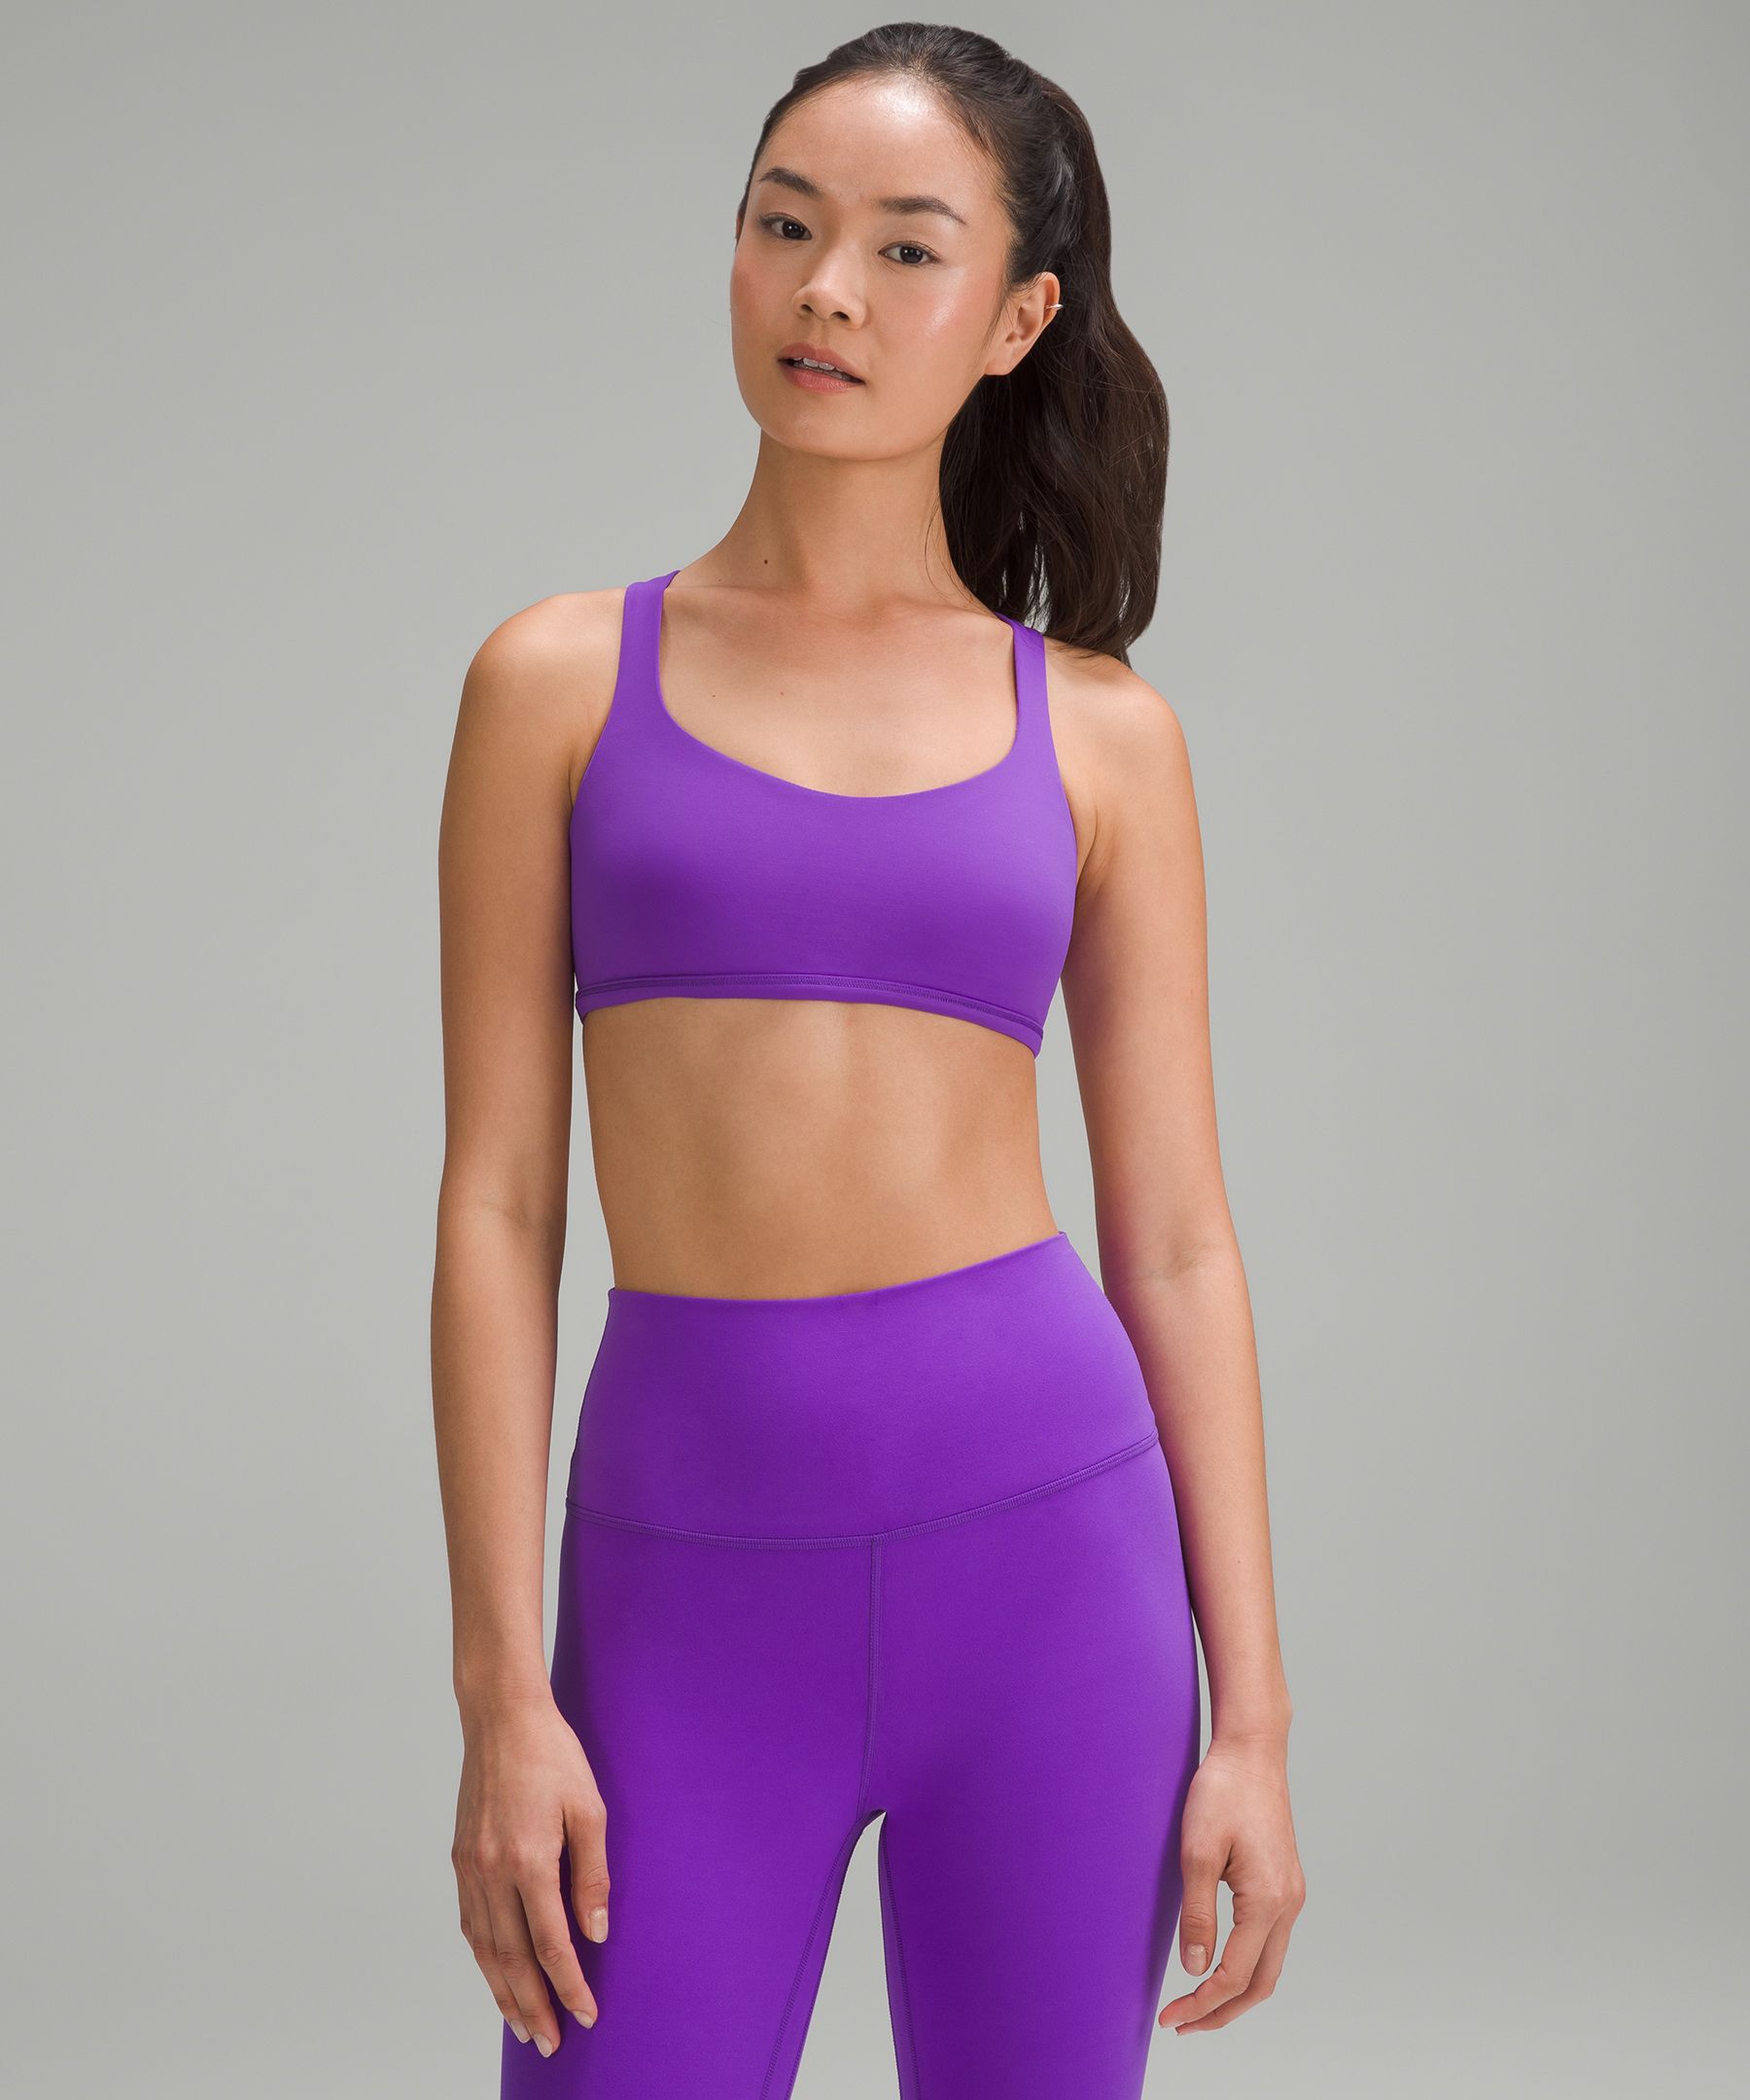 FREE] Purple Energized Sports Bra, Women's Fashion, Activewear on